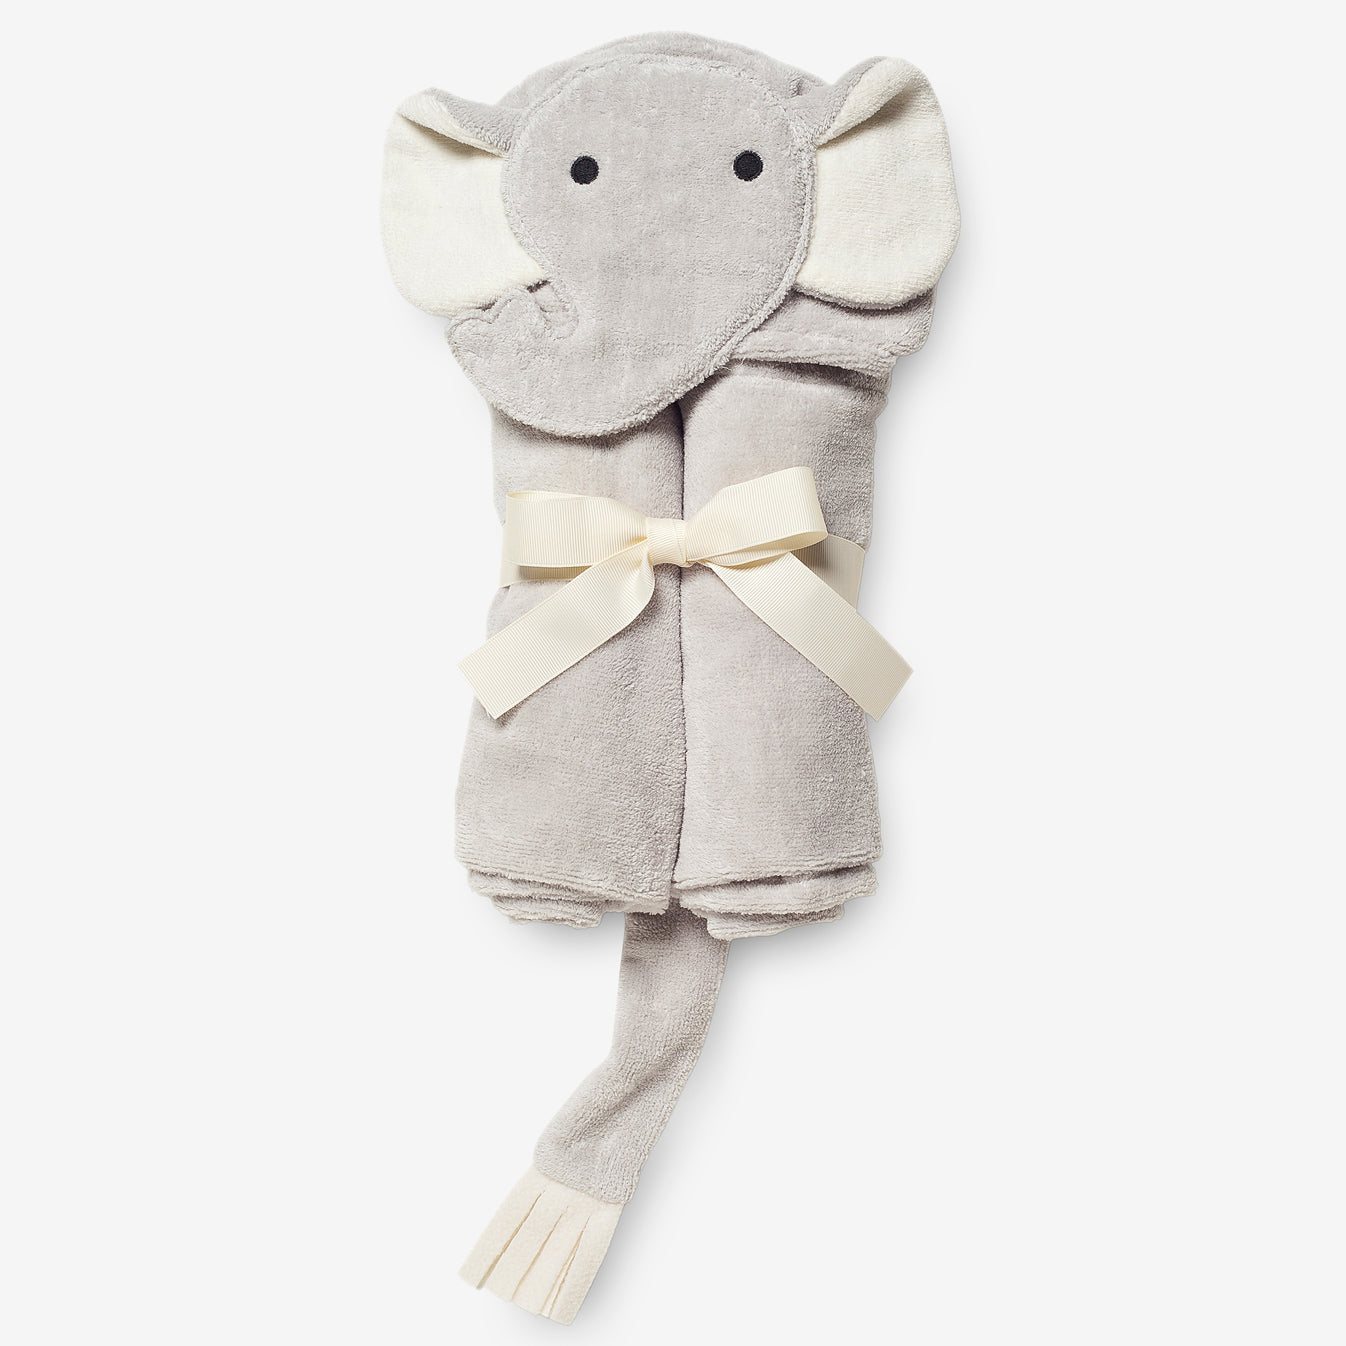 Hooded Baby Bath Wrap - Gray Elephant